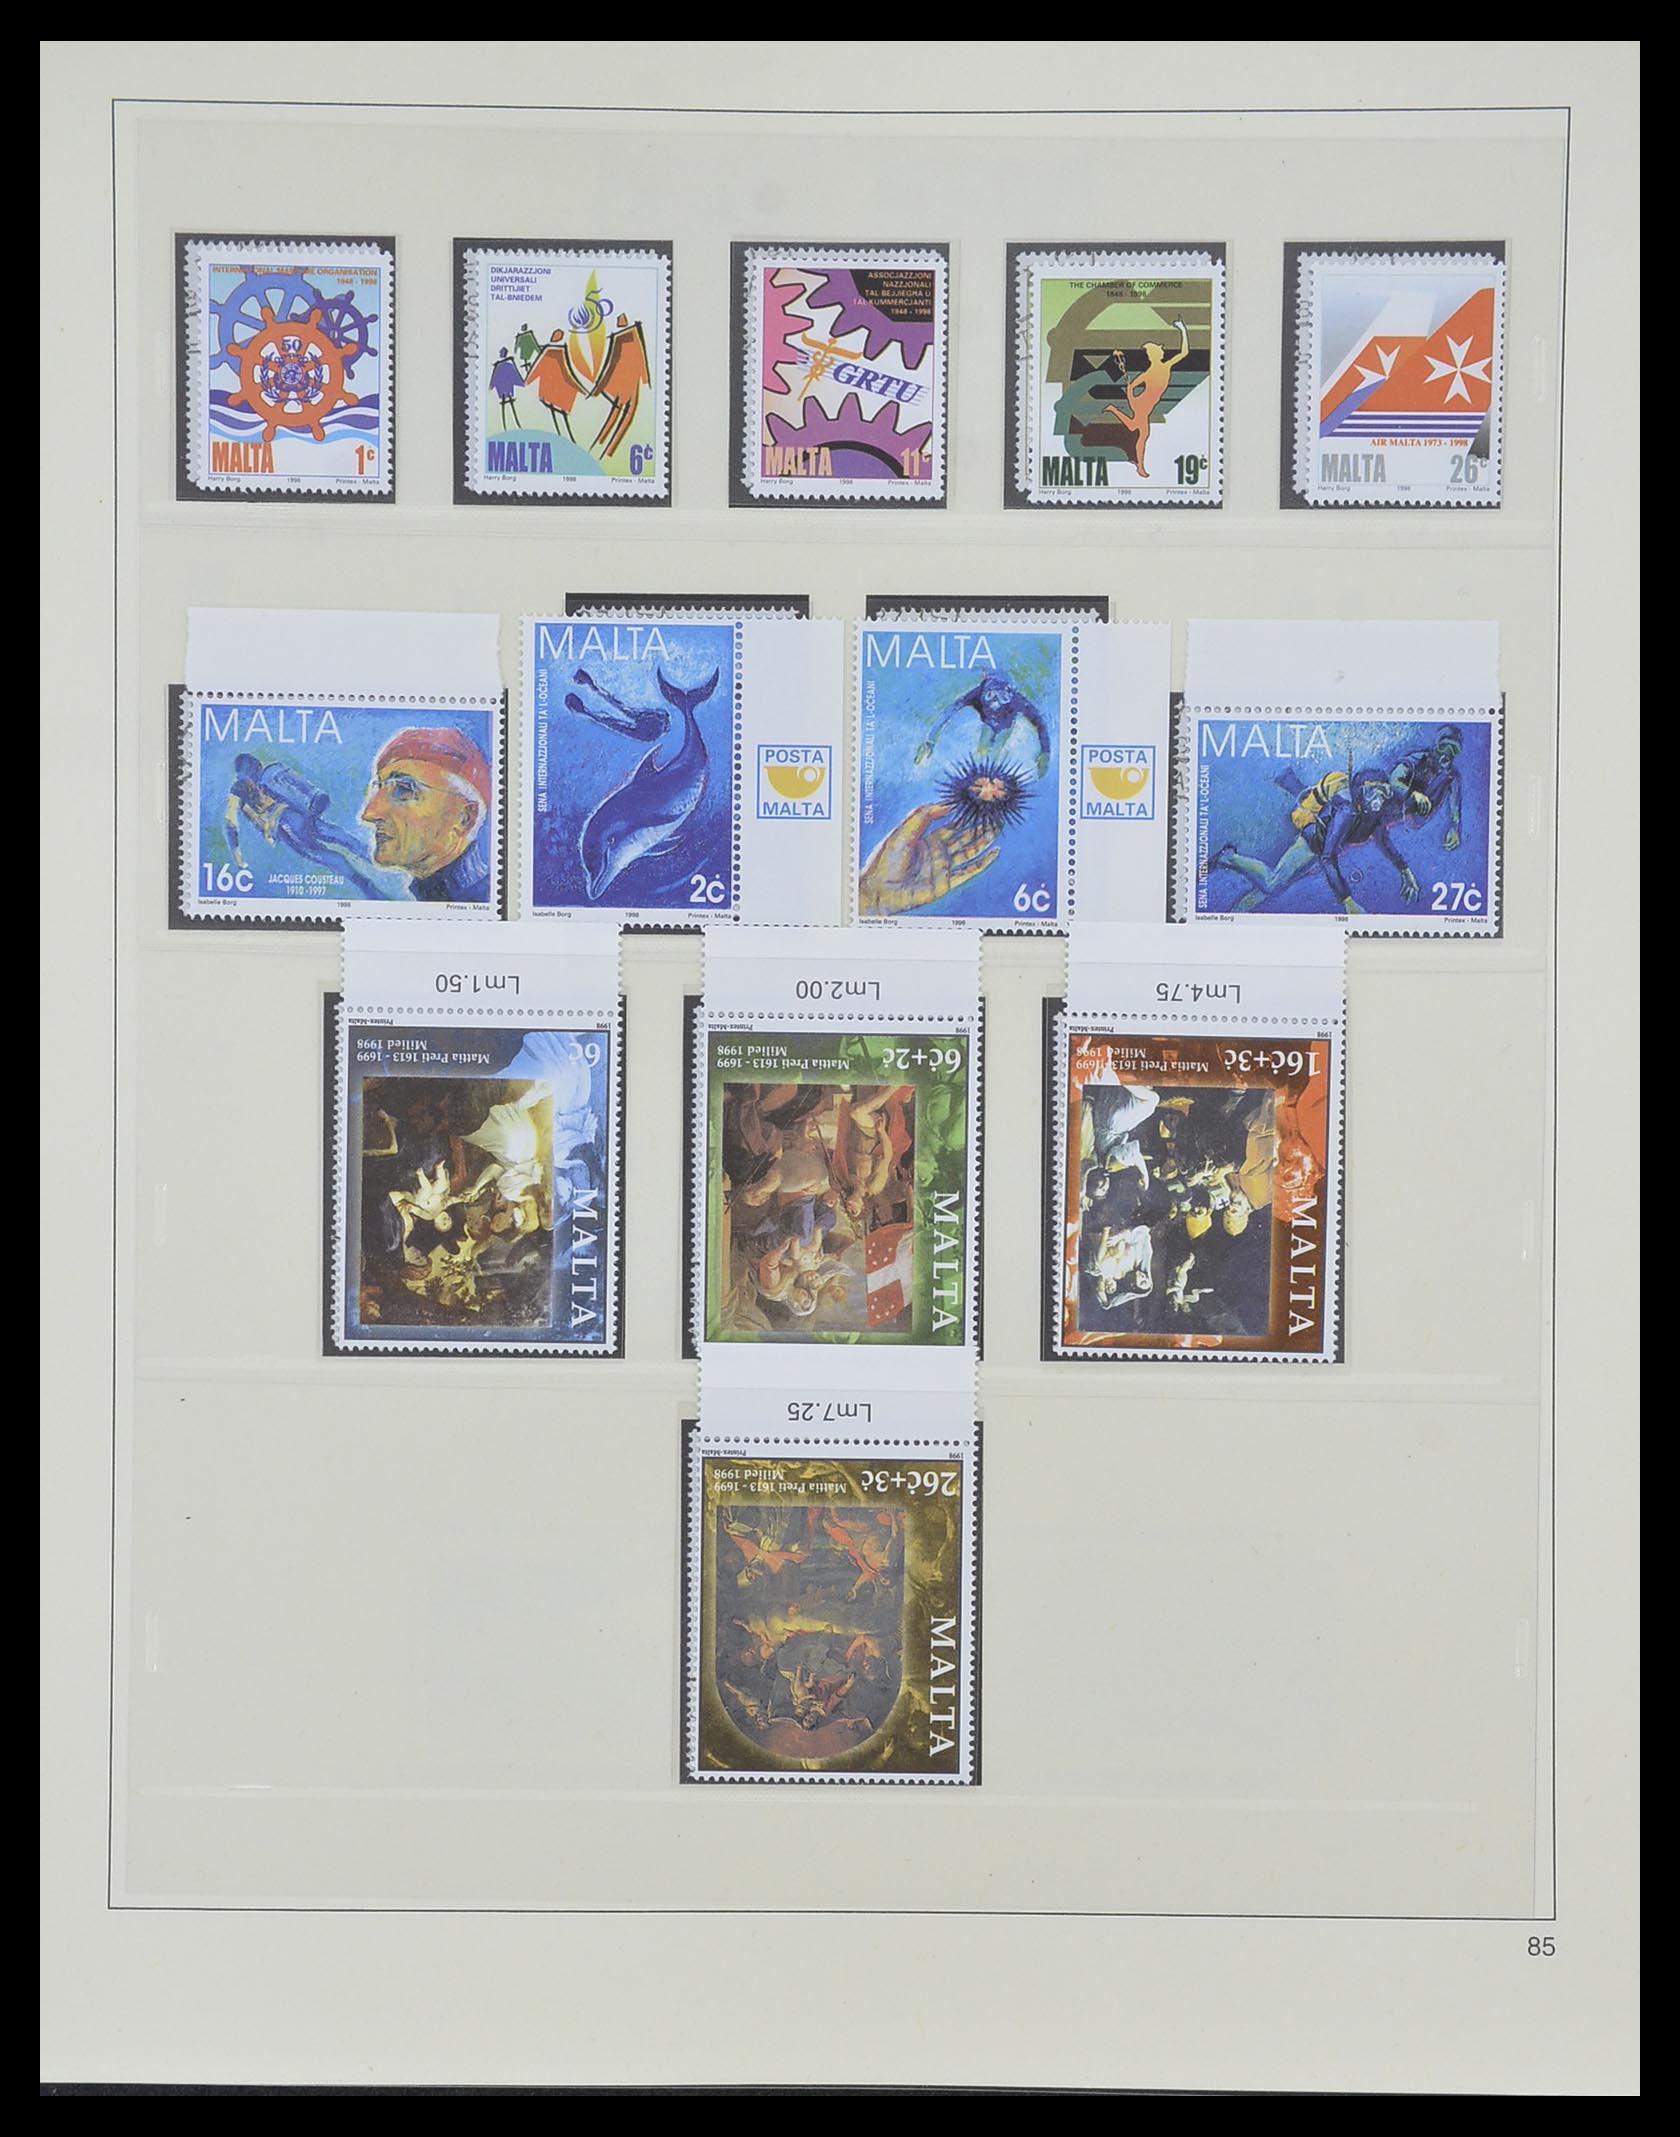 33968 187 - Stamp collection 33968 Malta 1861-2001.